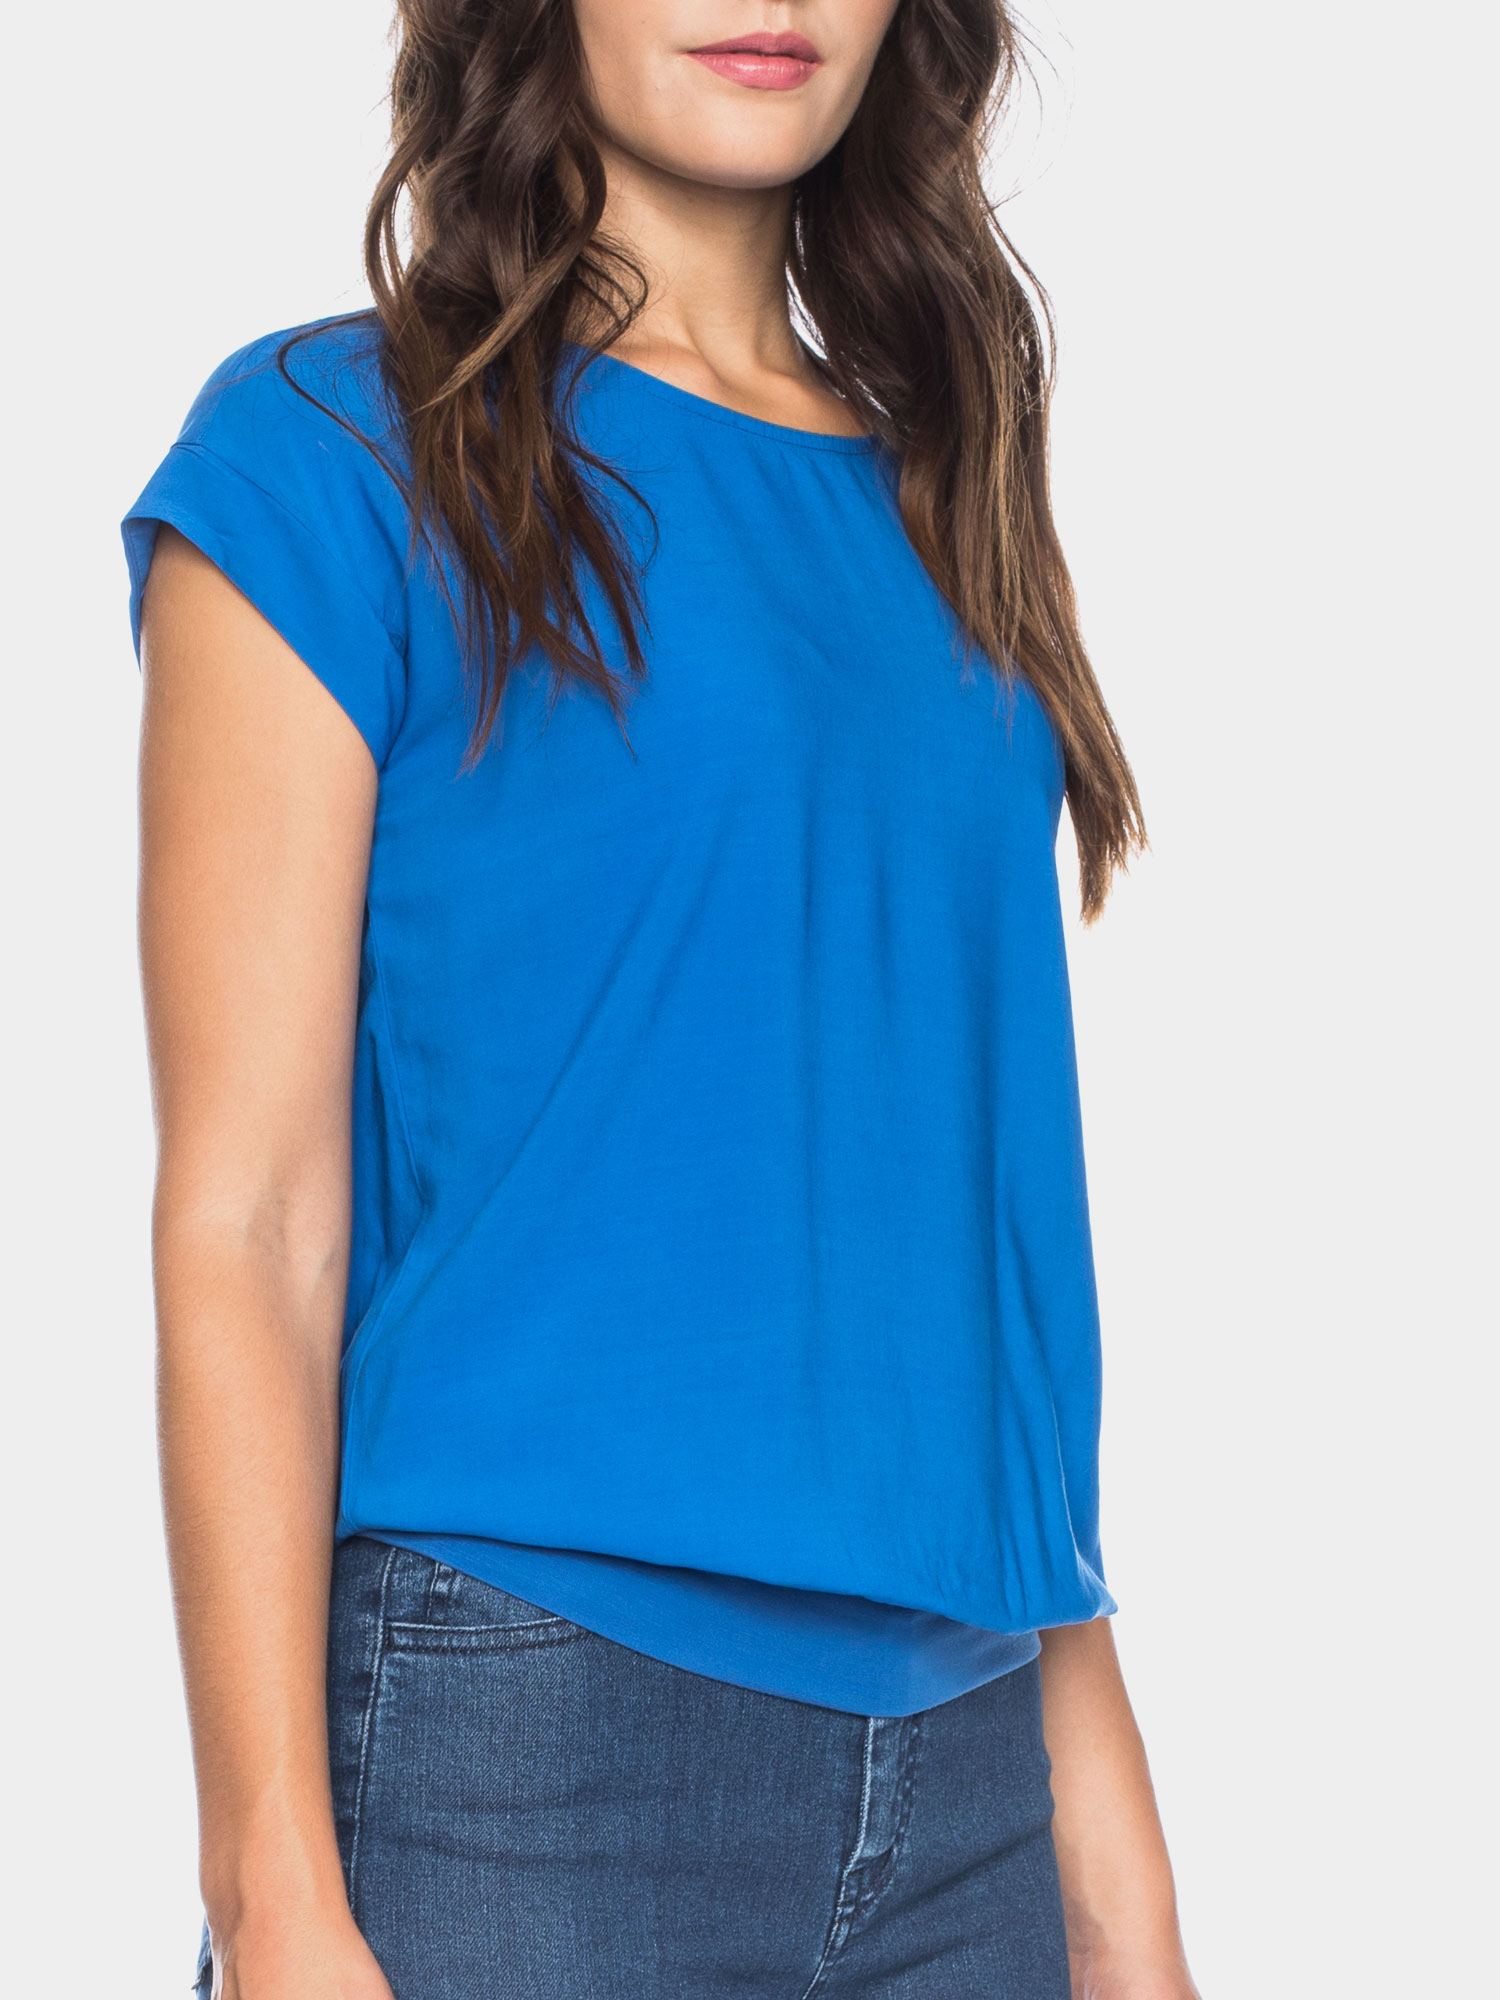 Leo - Lockeres Shirt aus Viskose in Blau, LENZING™ ECOVERO™